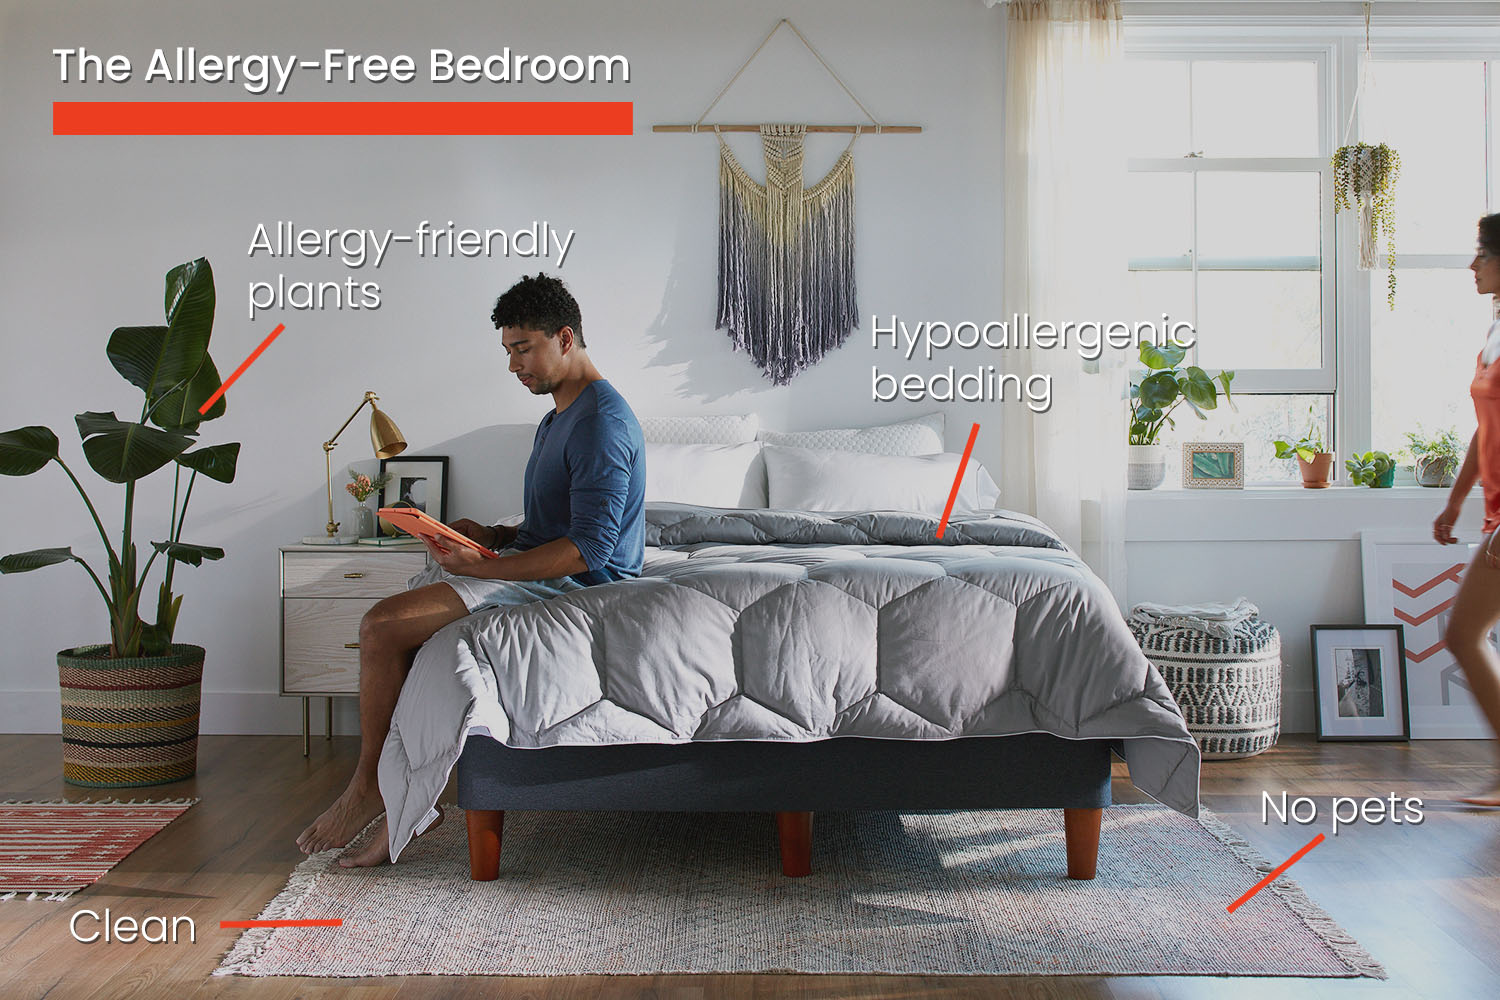 The allergy-free bedroom